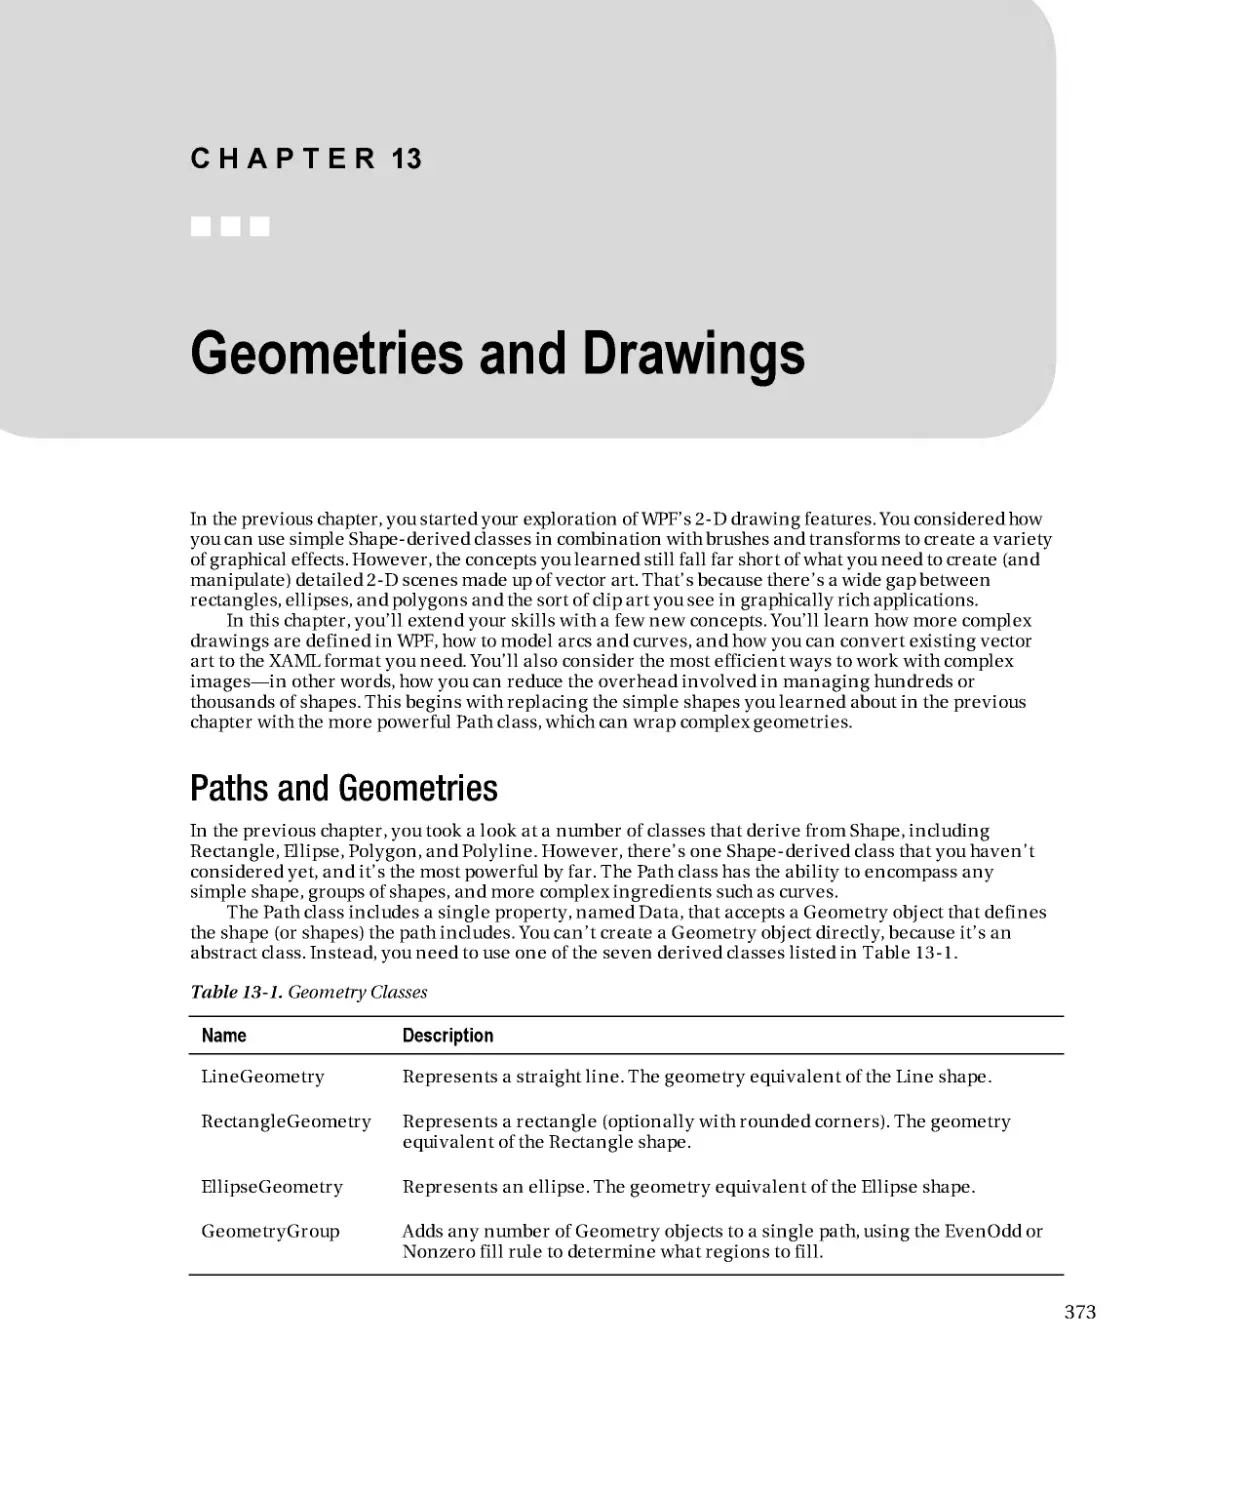 Geometries and Drawings